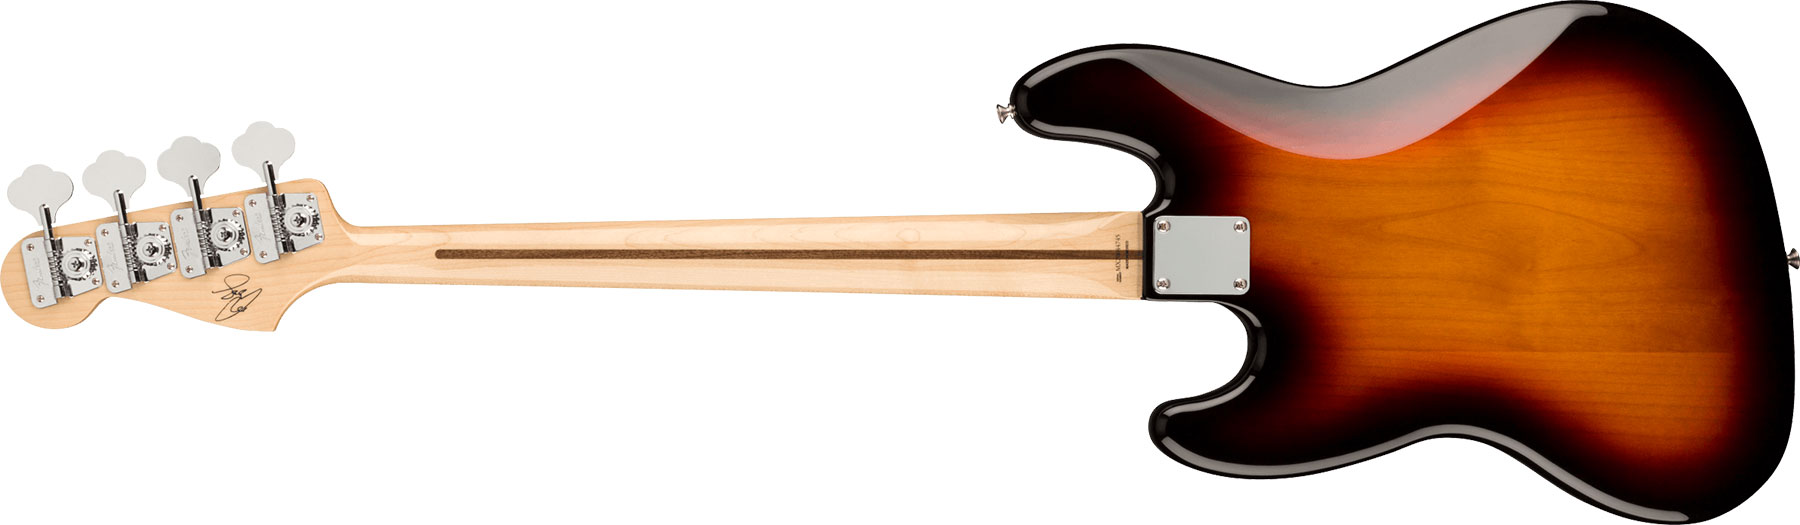 Fender Geddy Lee Jazz Bass Signature Mex Mn - 3-color Sunburst - Basse Électrique Solid Body - Variation 1